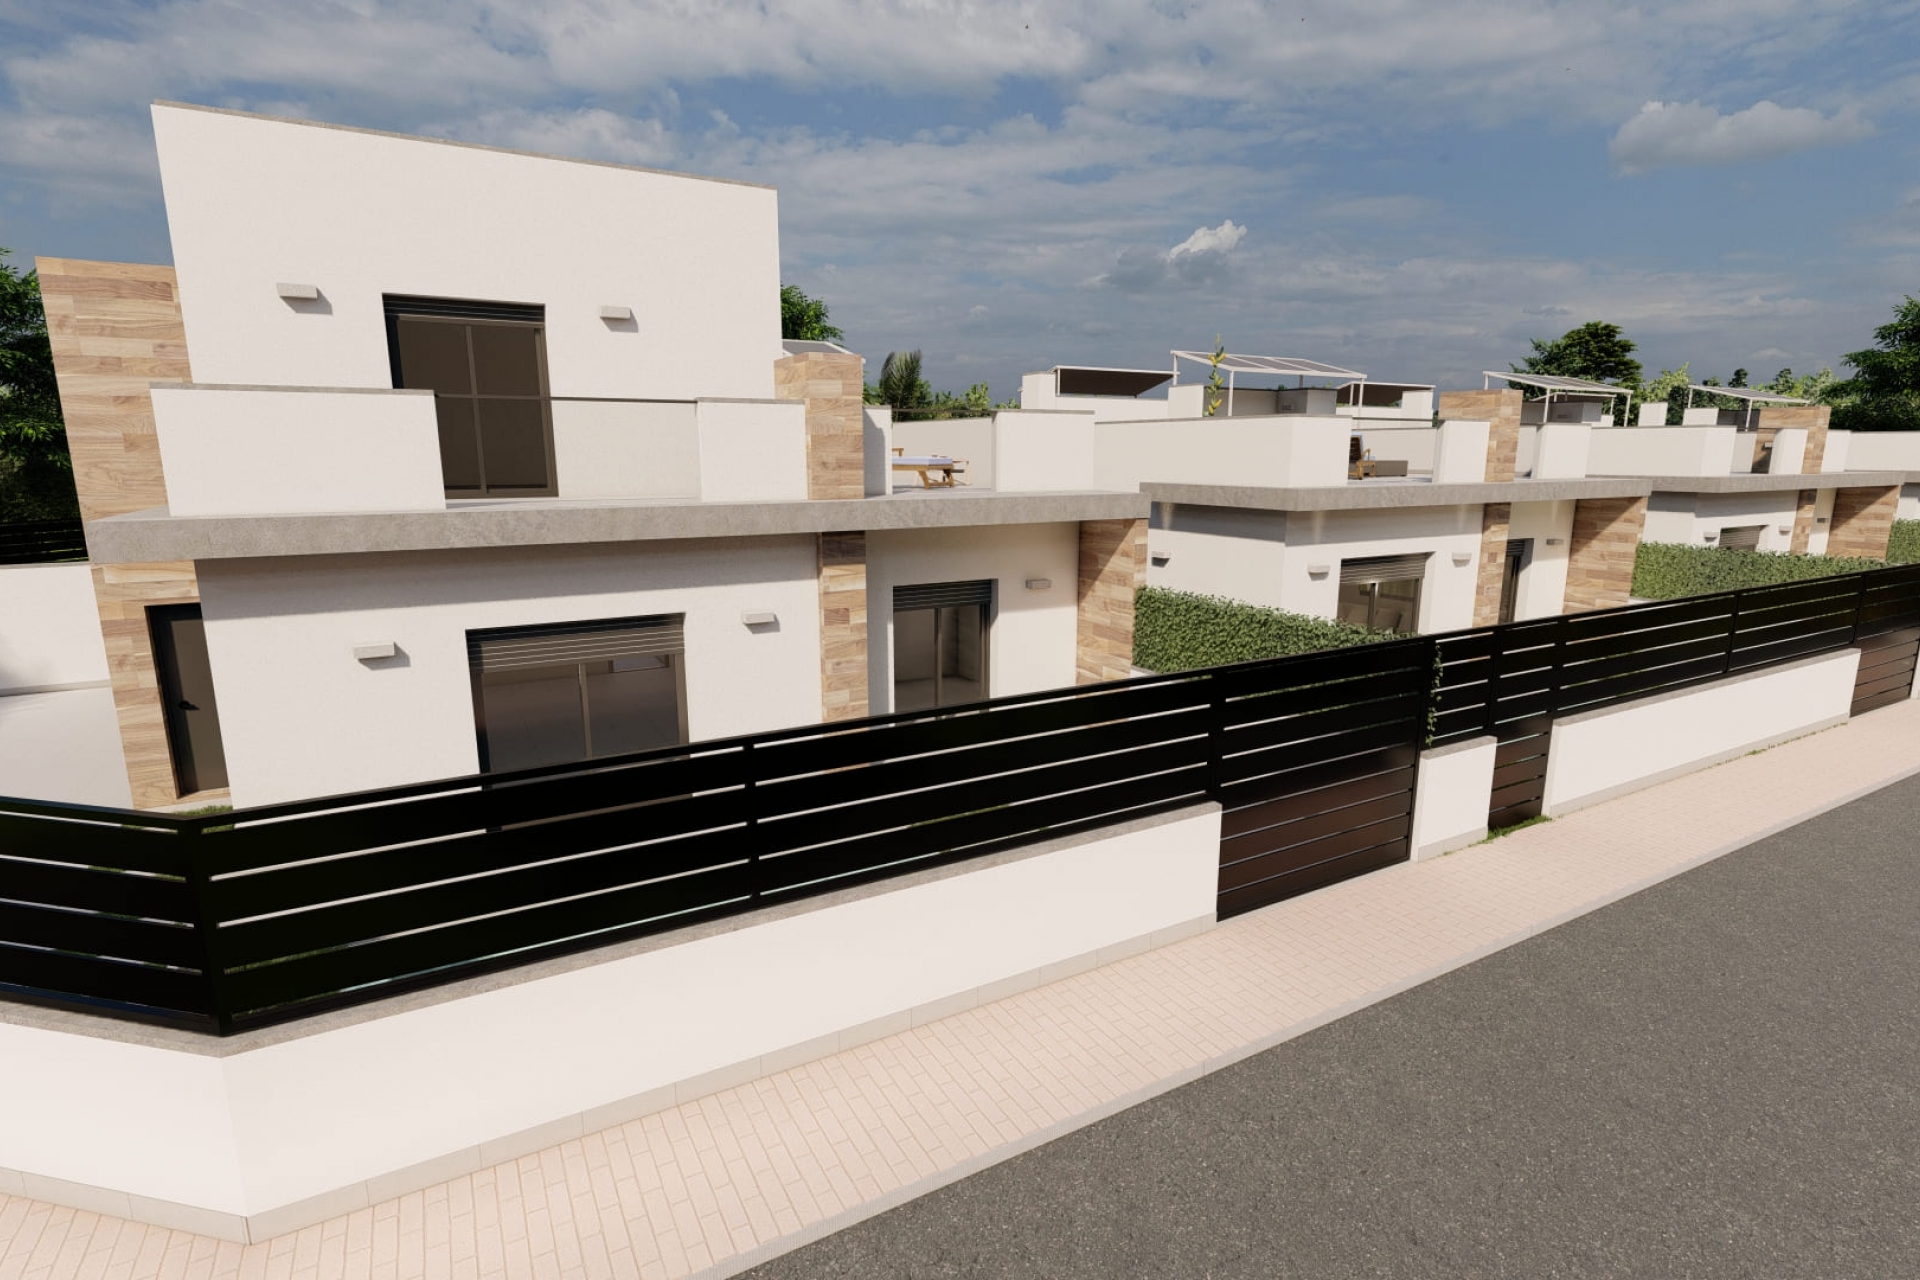 New Property for sale - Villa for sale - Roldan - El Alba